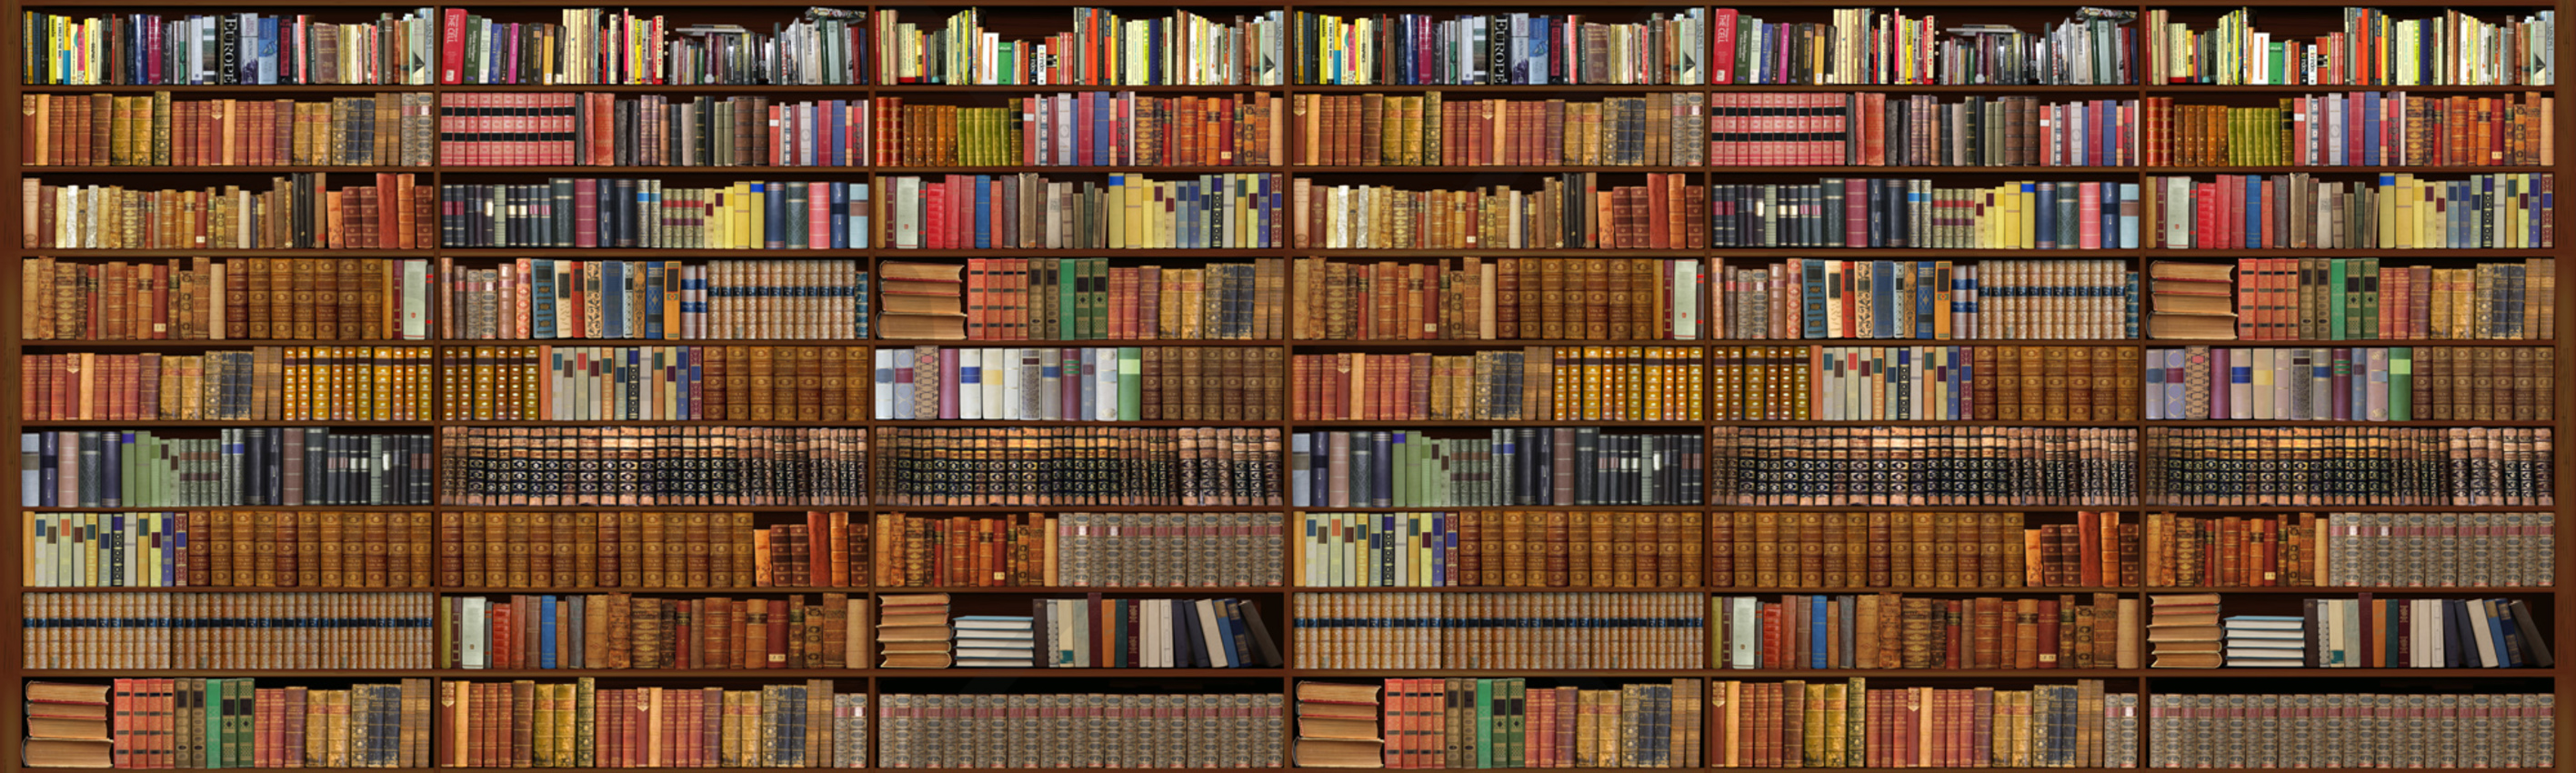 bookcase wallpaper b&q,shelving,bookcase,shelf,book,library